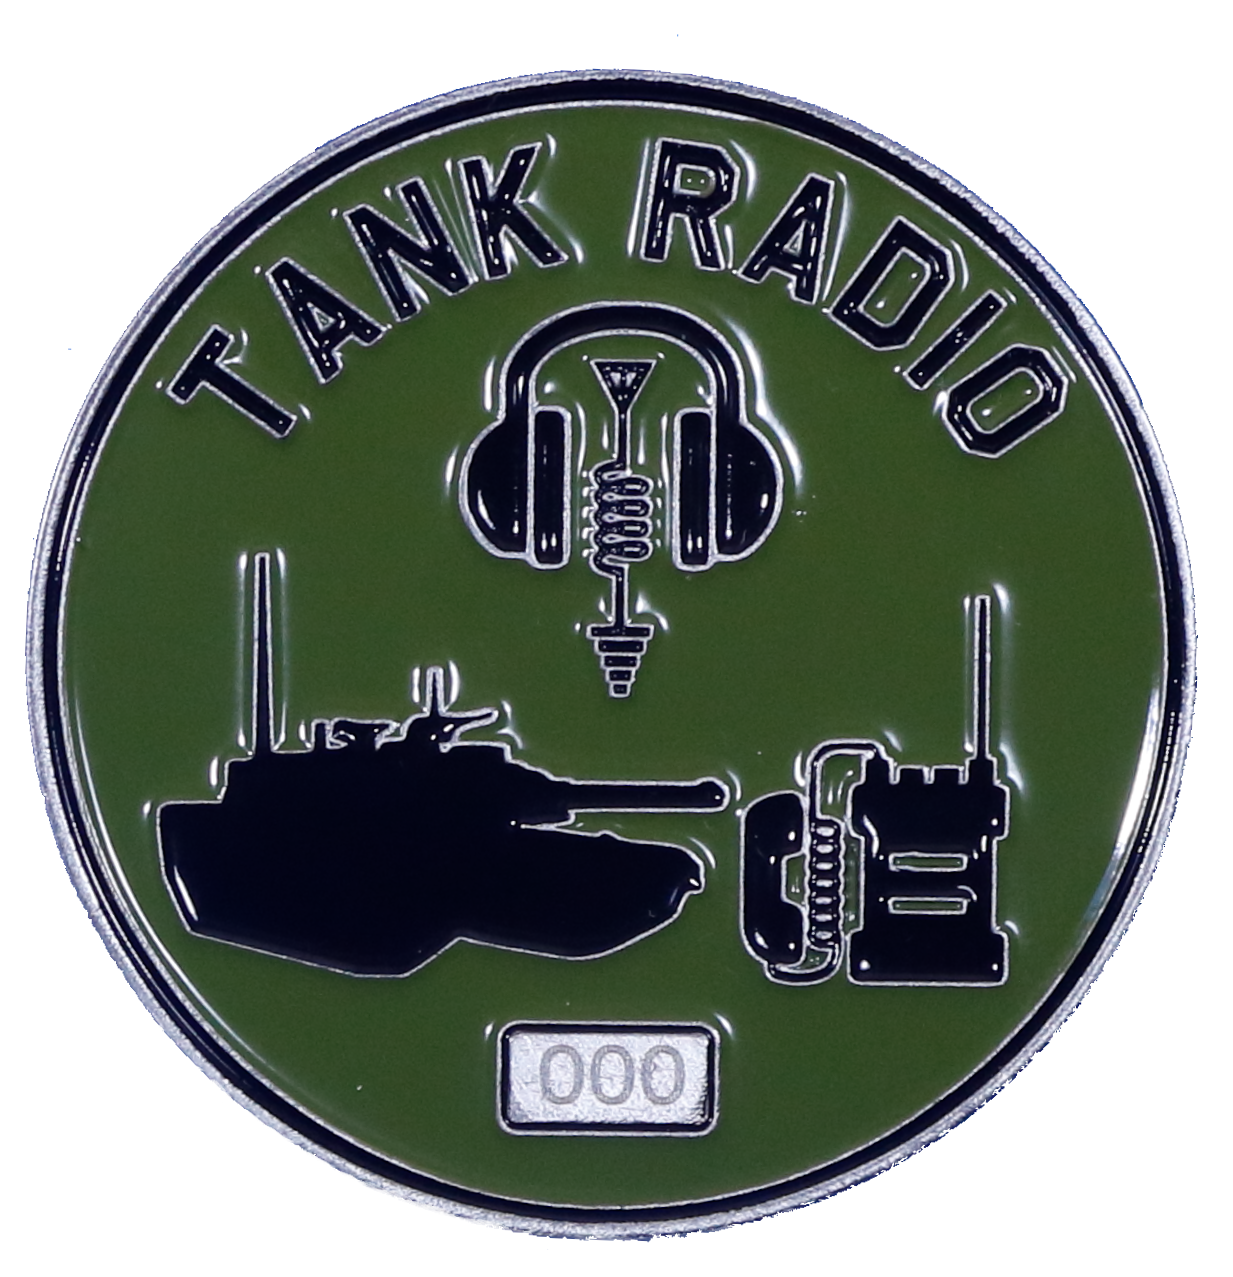 Tank Radio Challenge Coins